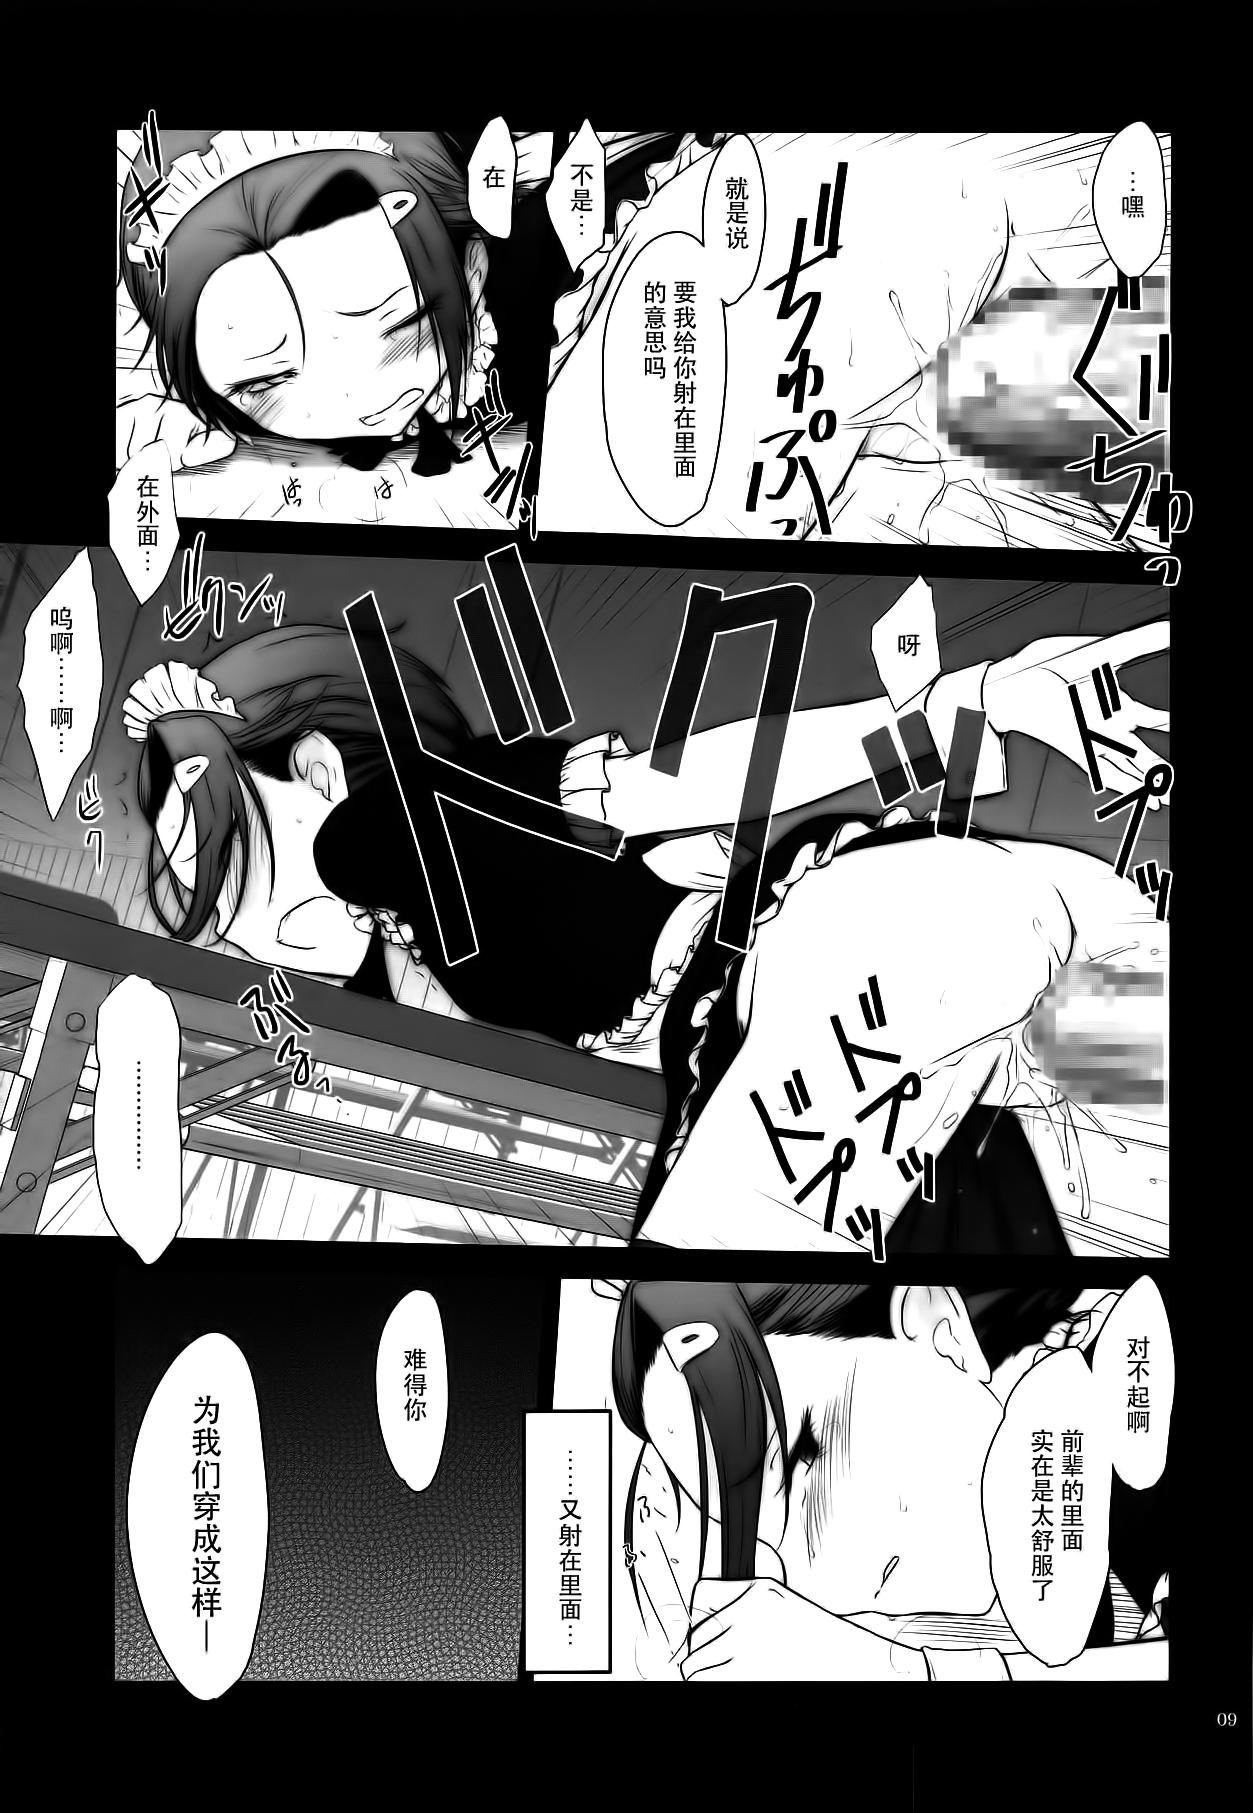 Tinder Petite Soeur 17 - Bokutachi wa benkyou ga dekinai Menage - Page 9